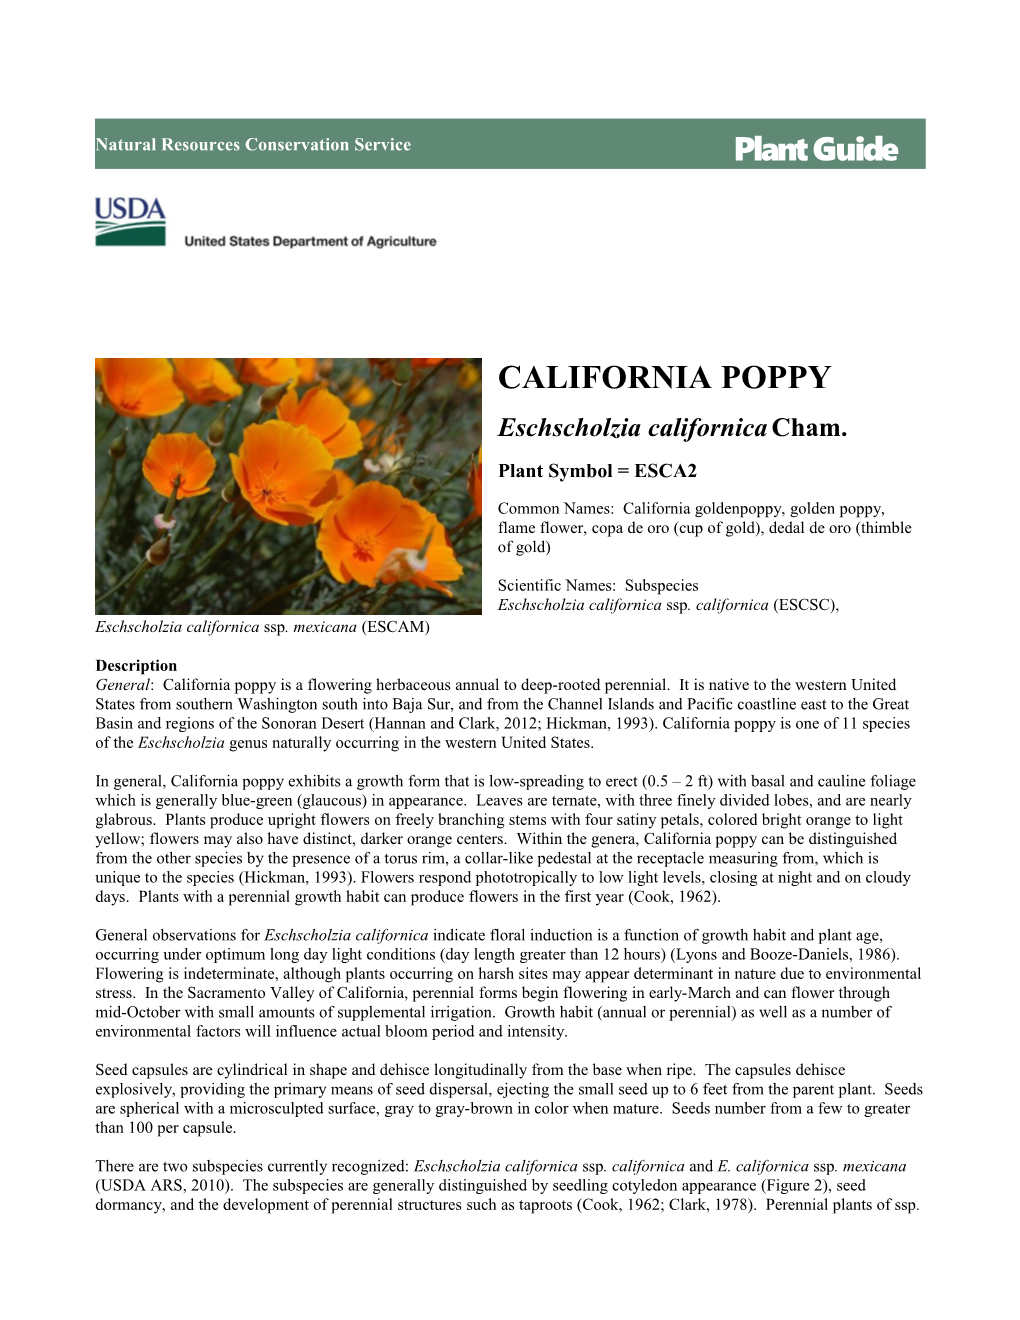 California Poppy (Eschscholzia Californica) Plant Guide